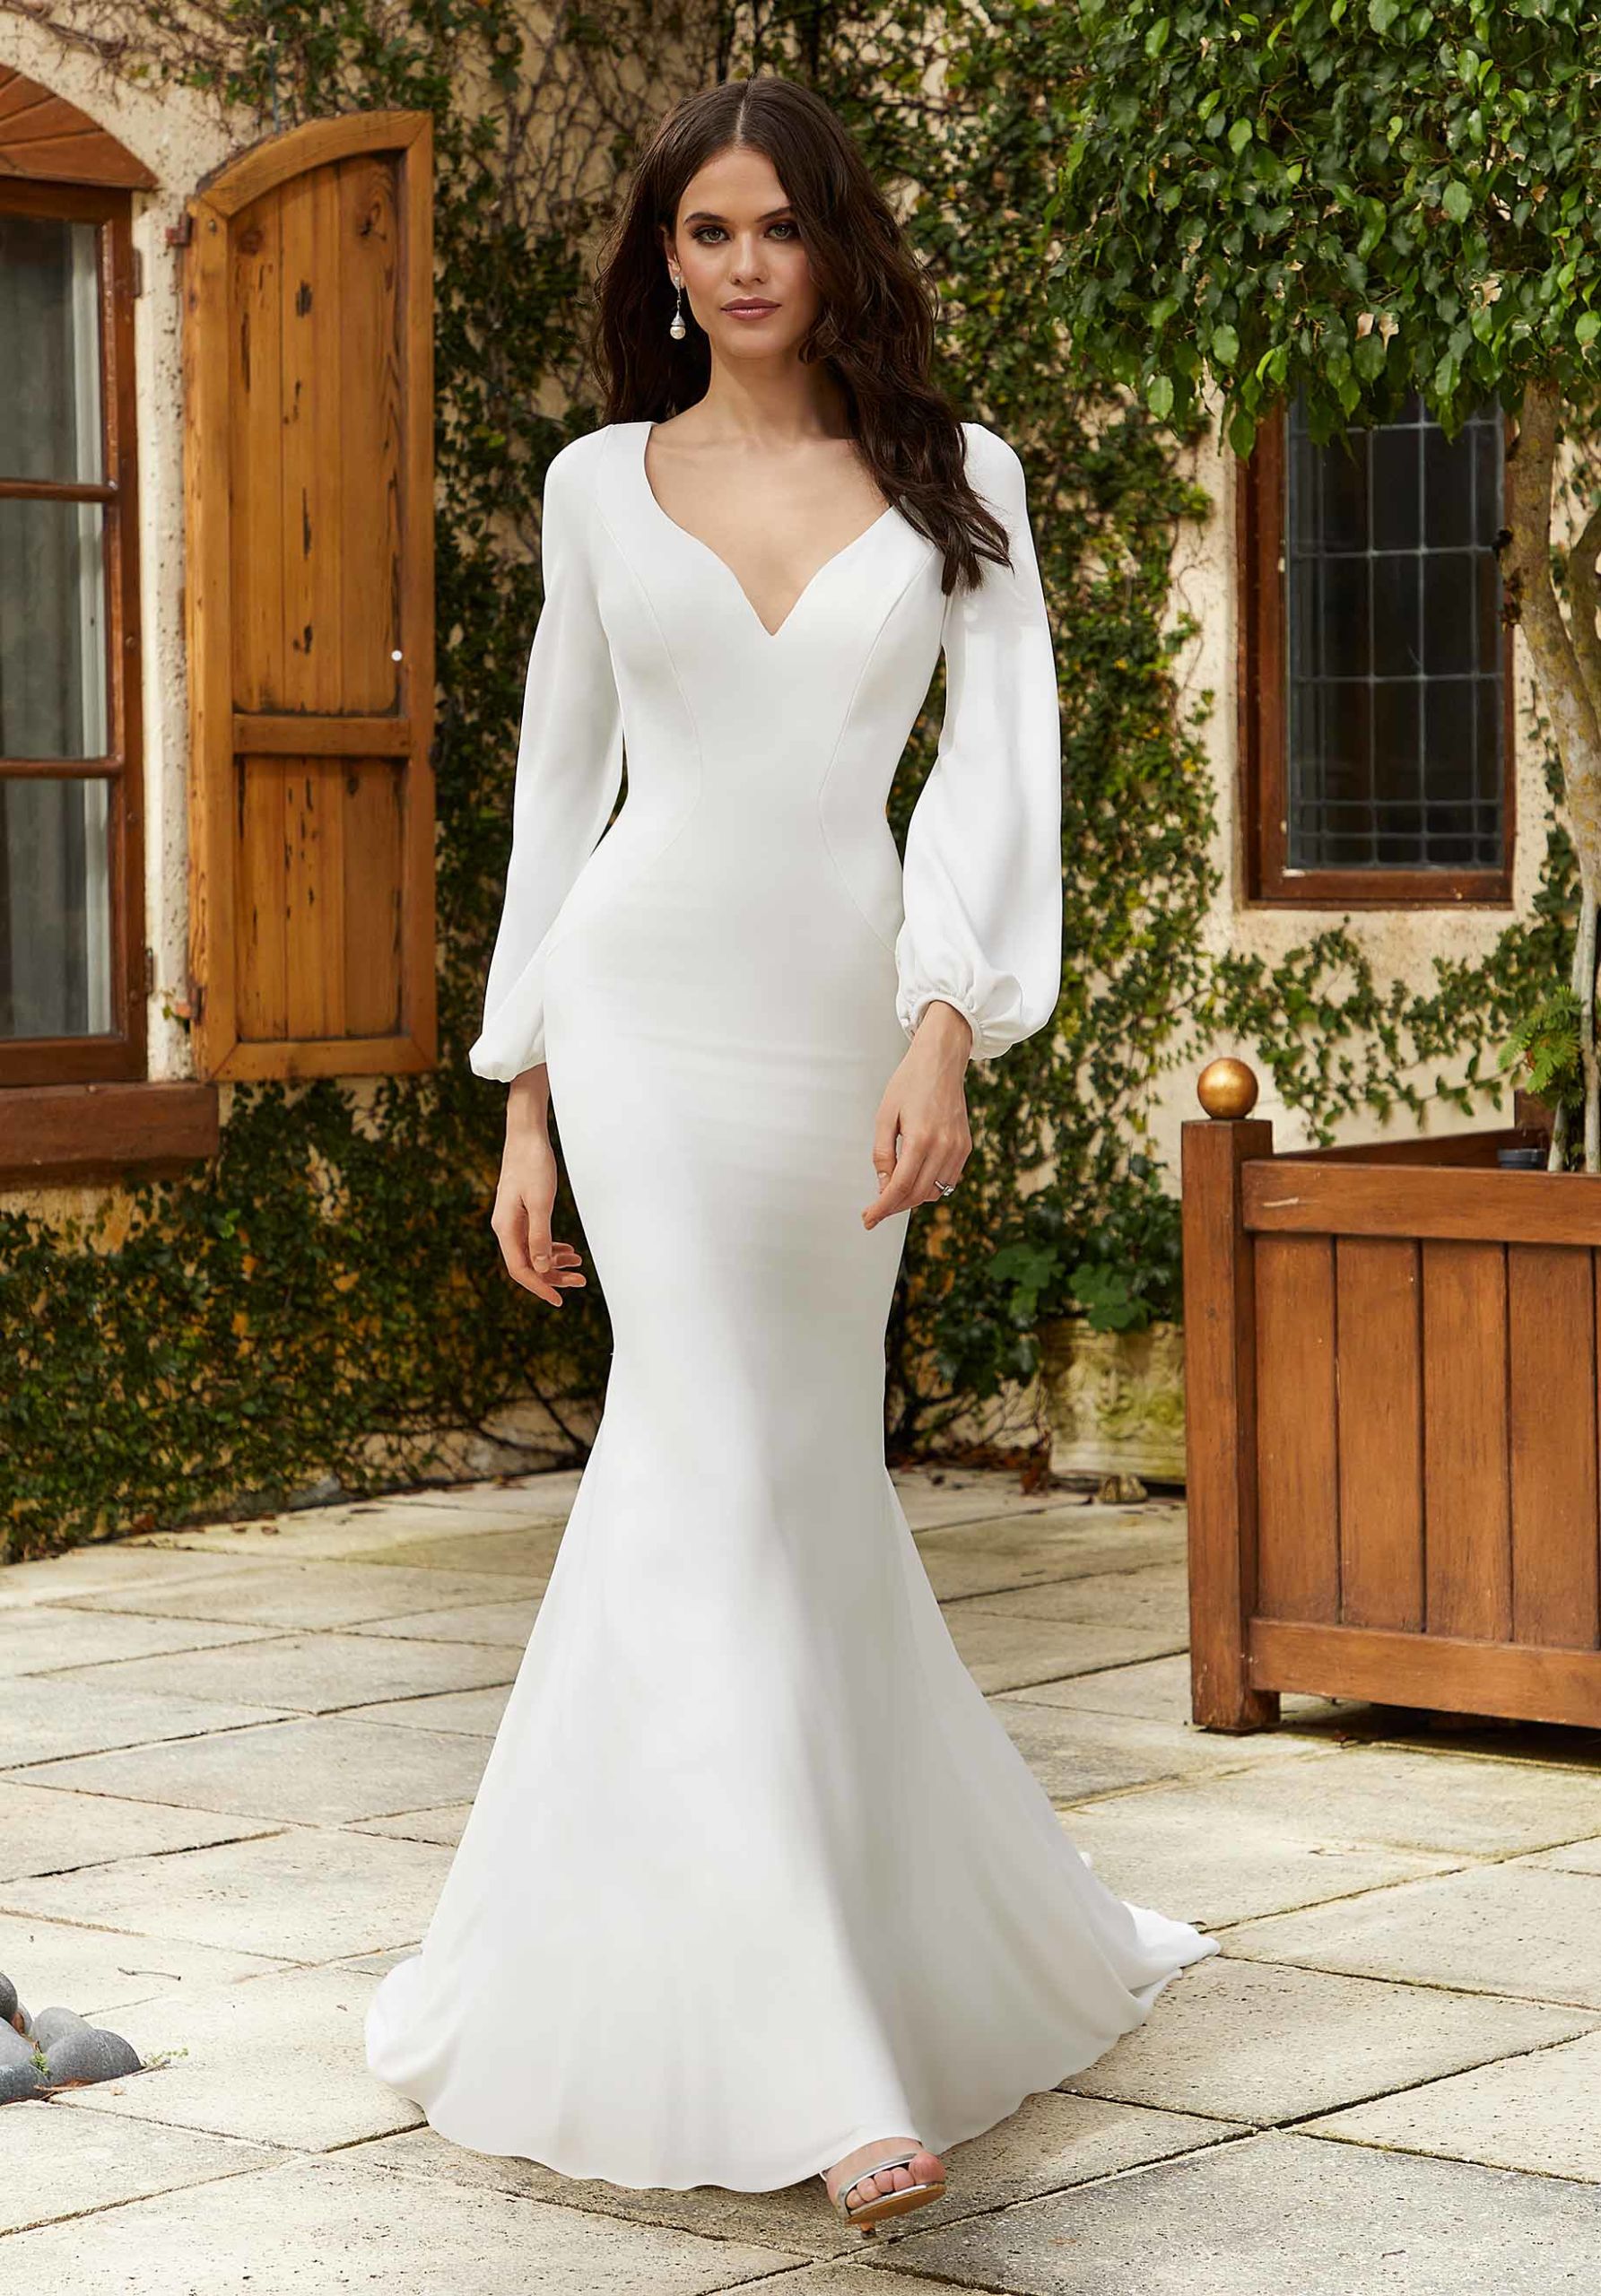 Wedding Dress - Mori Lee The Other White Dress Fall 2022 Collection: 12141  - Gigi Wedding Dress